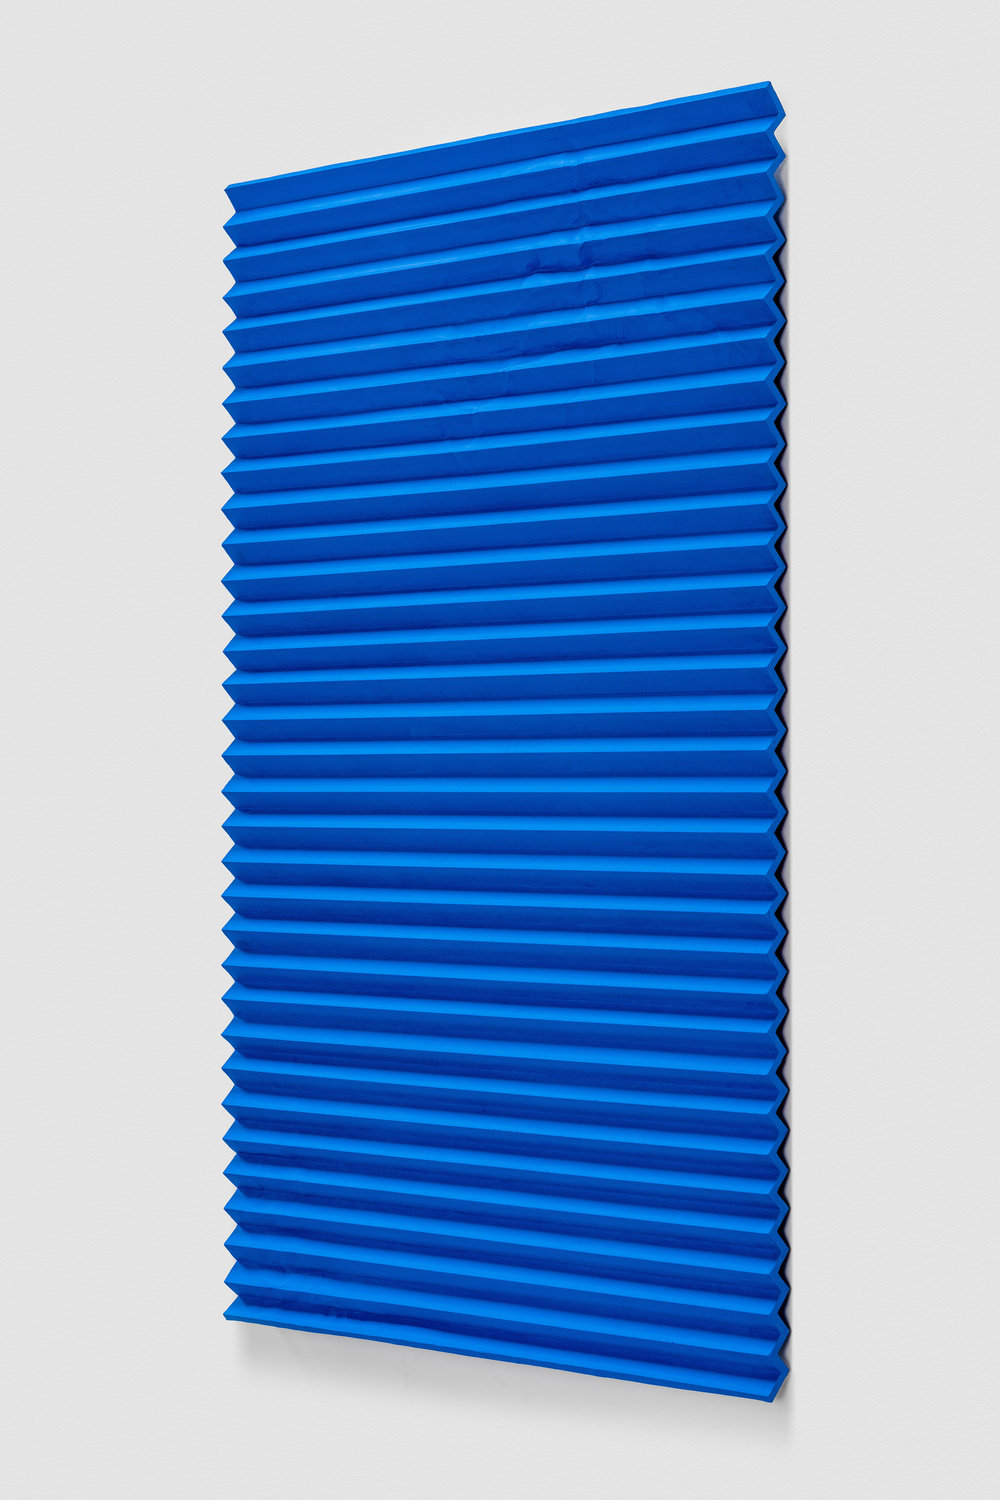 Hagen, initiation ii (accordion fold, phthalo blue) (view 2), 2017, cast acrylic paint, molding paste, fiberglass reinforced plastic, aluminum armature, 83 x 43 x 3 in., 210.8 x 109.2 x 7.6 cm, cnon 60.898 joshua wilson white